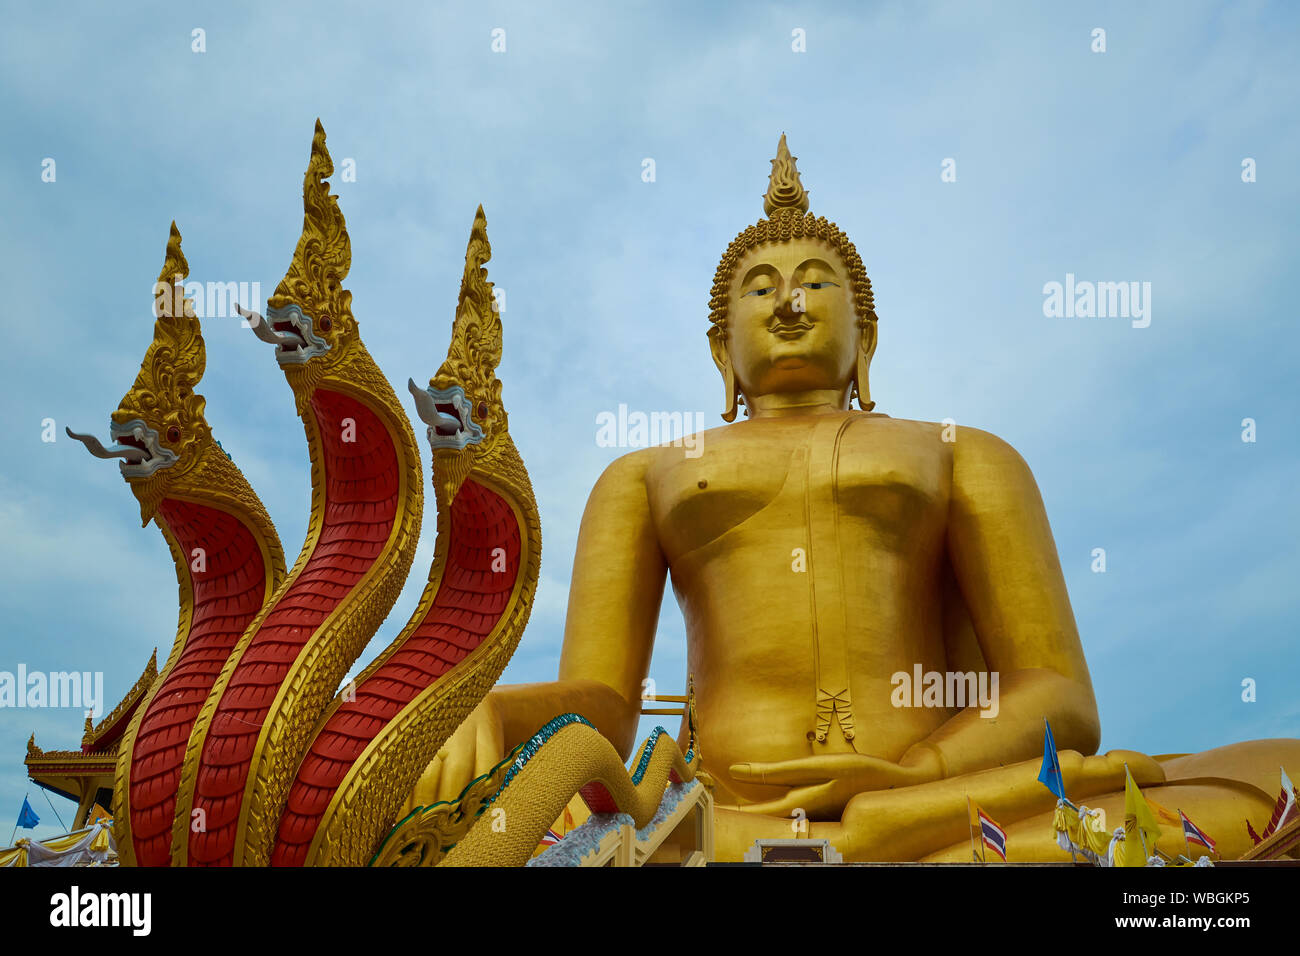 A giant, gold sitting Buddha with snake naga figures at Wat Muang in Ang Thong, Thailand. Stock Photo